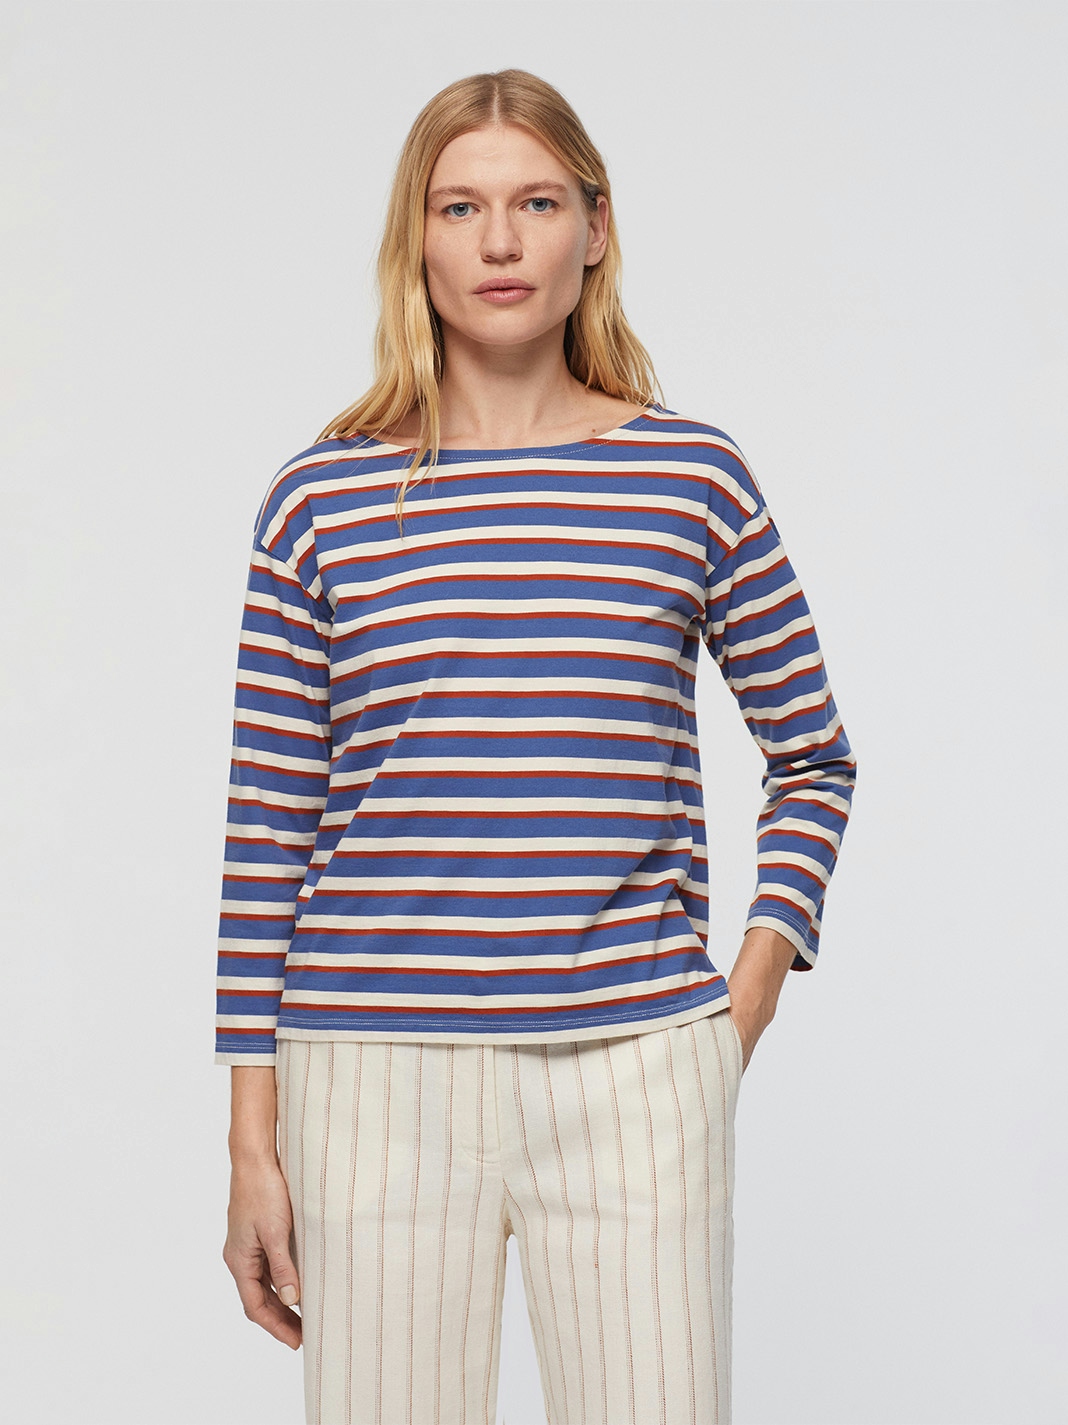 Striped boat t-shirt